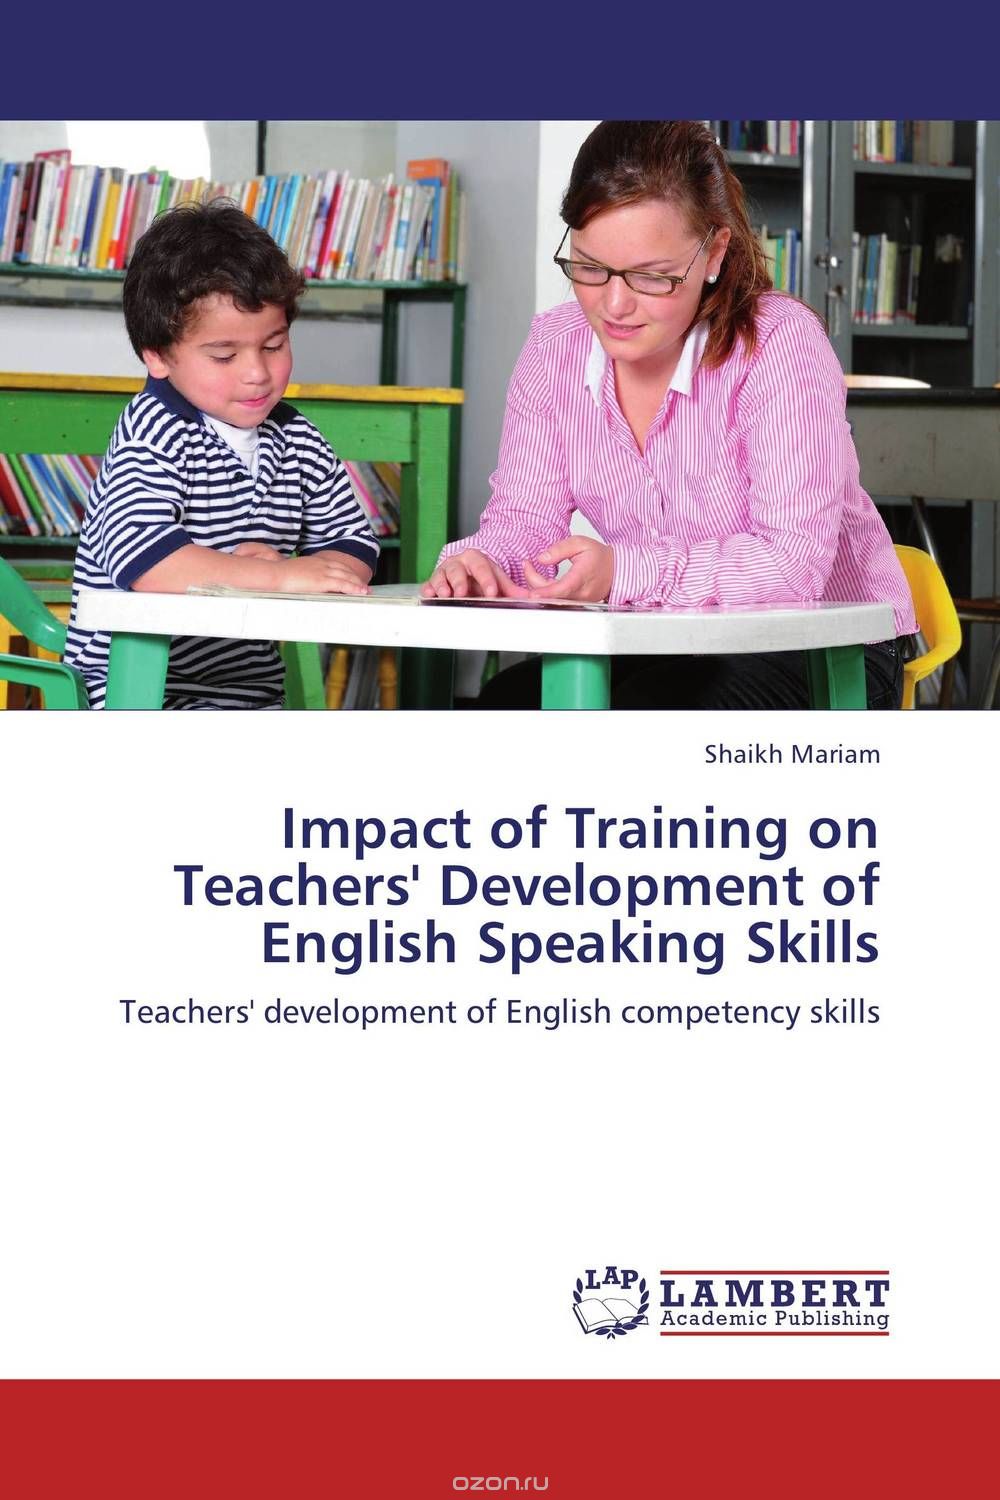 Скачать книгу "Impact of Training on Teachers' Development of English Speaking Skills"